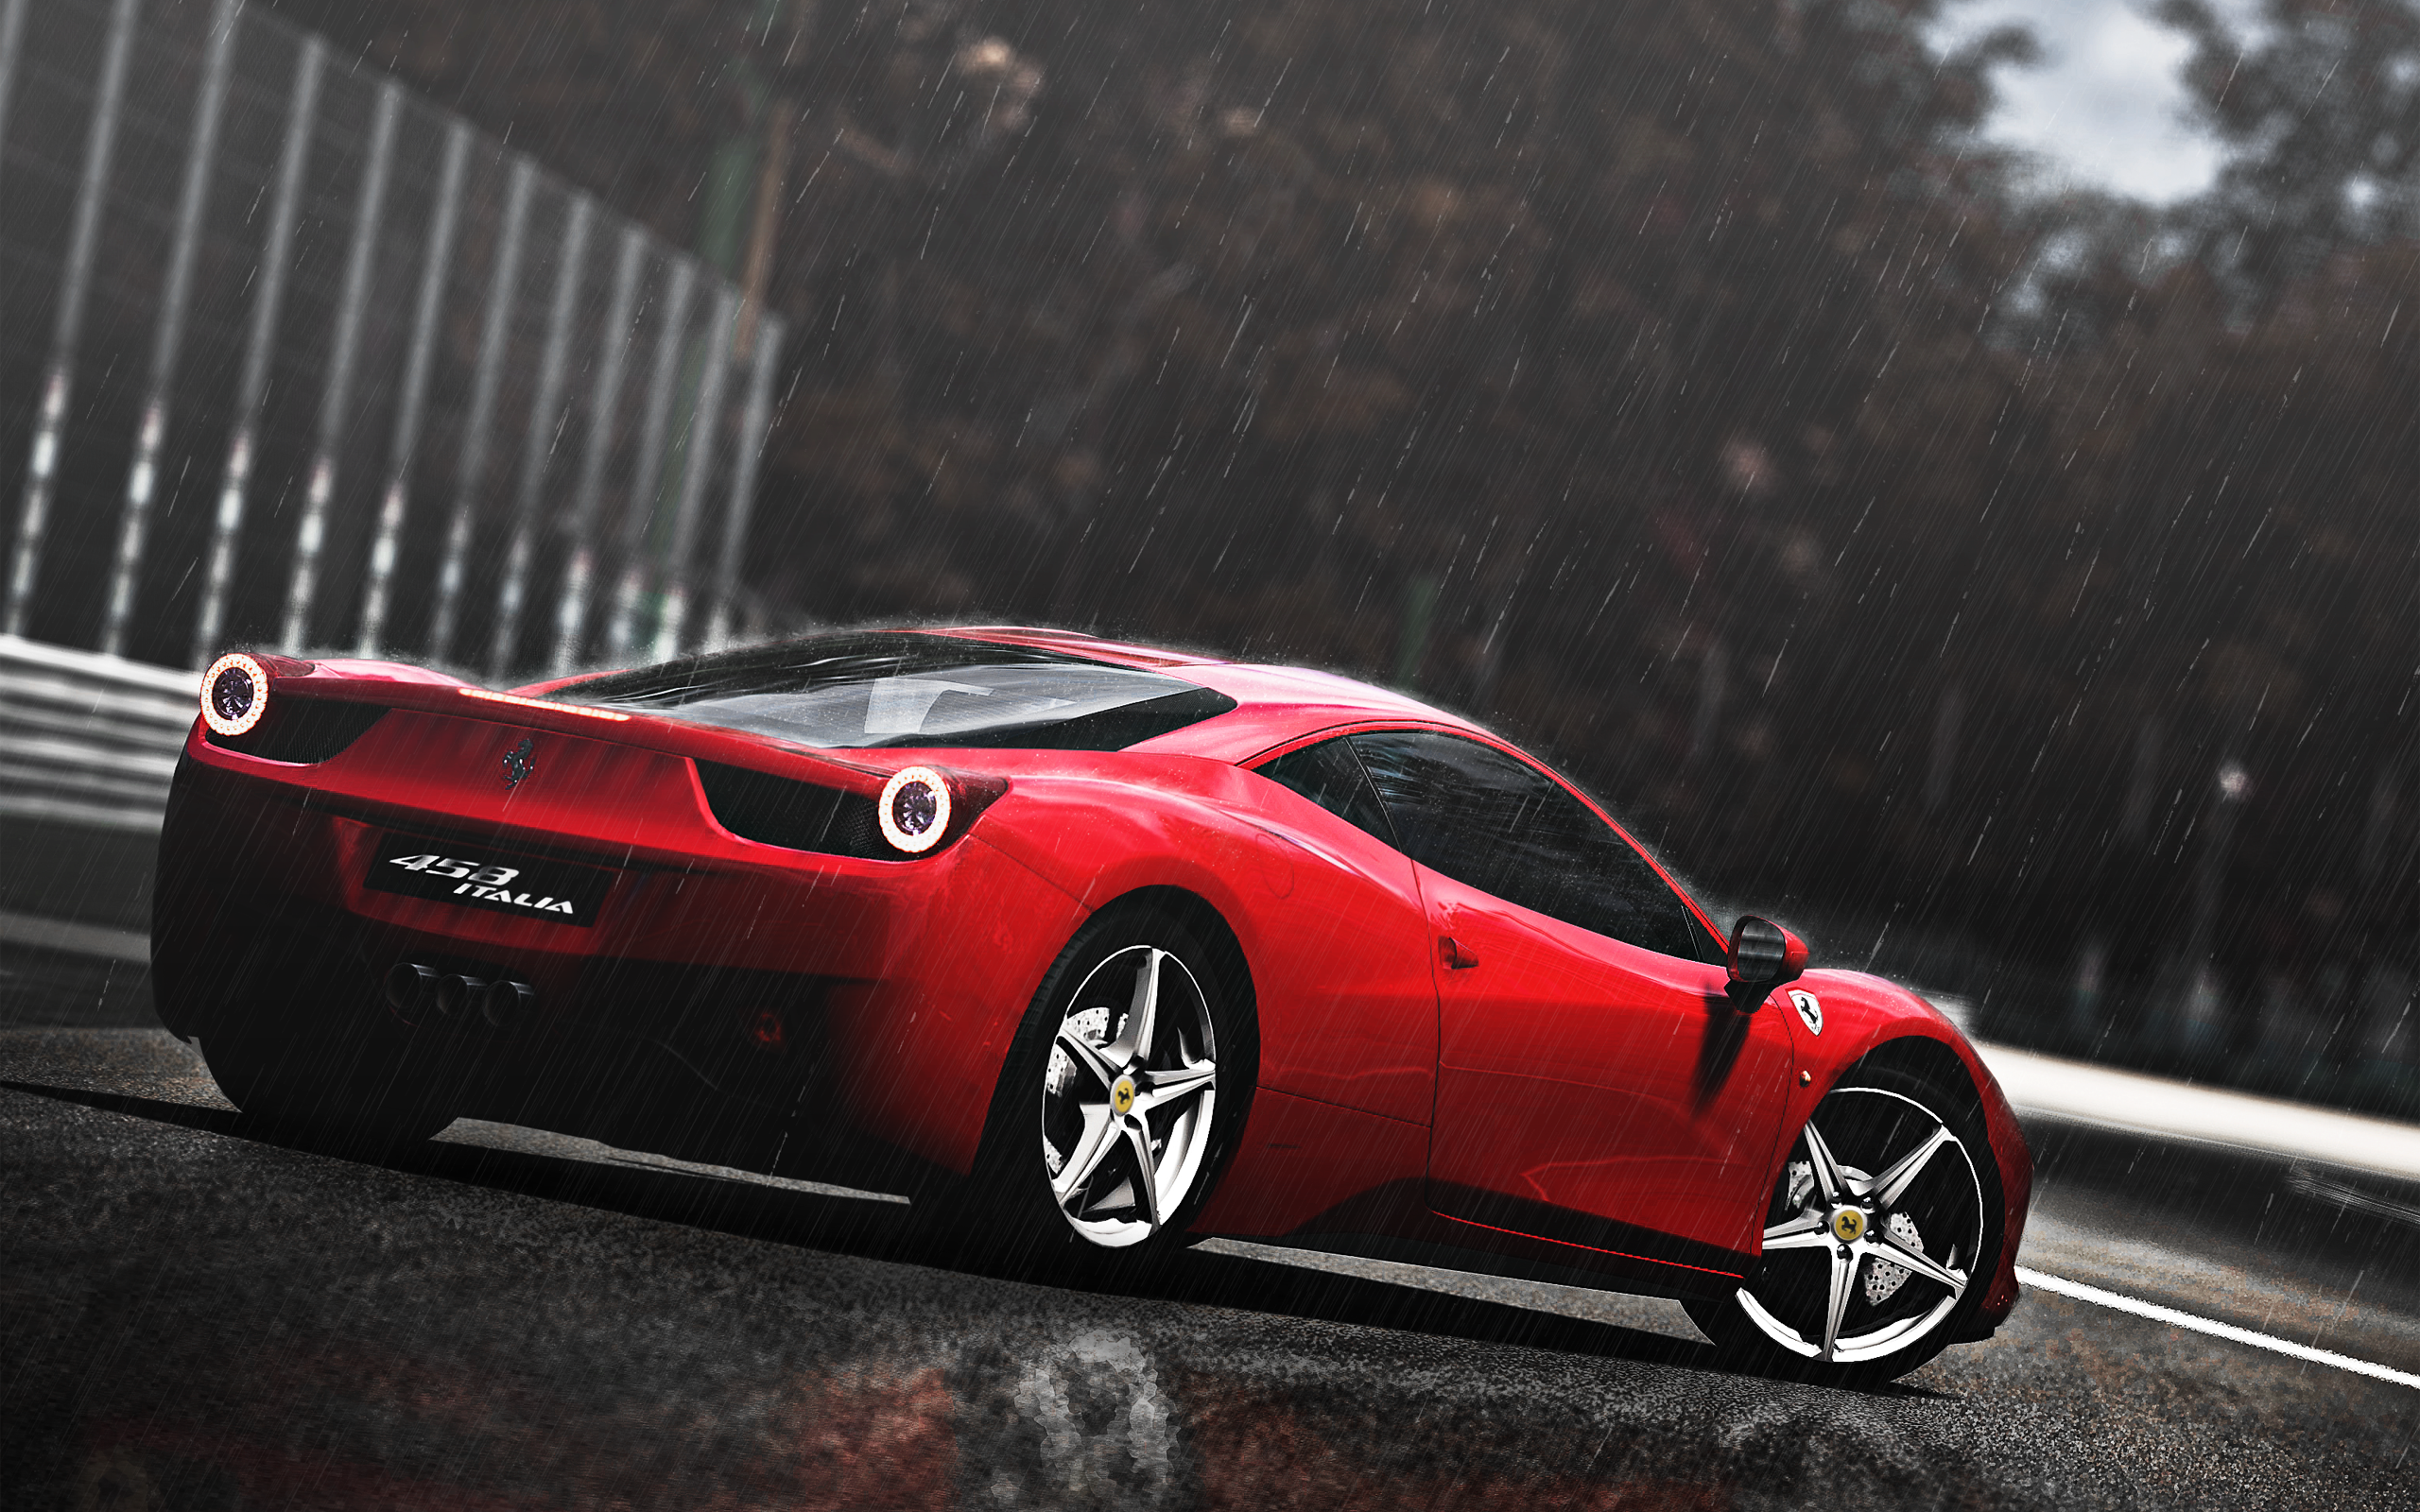 2560x1600 Ferrari 458 Italia in the Rain desktop PC and Mac wallpaper 2560x1600